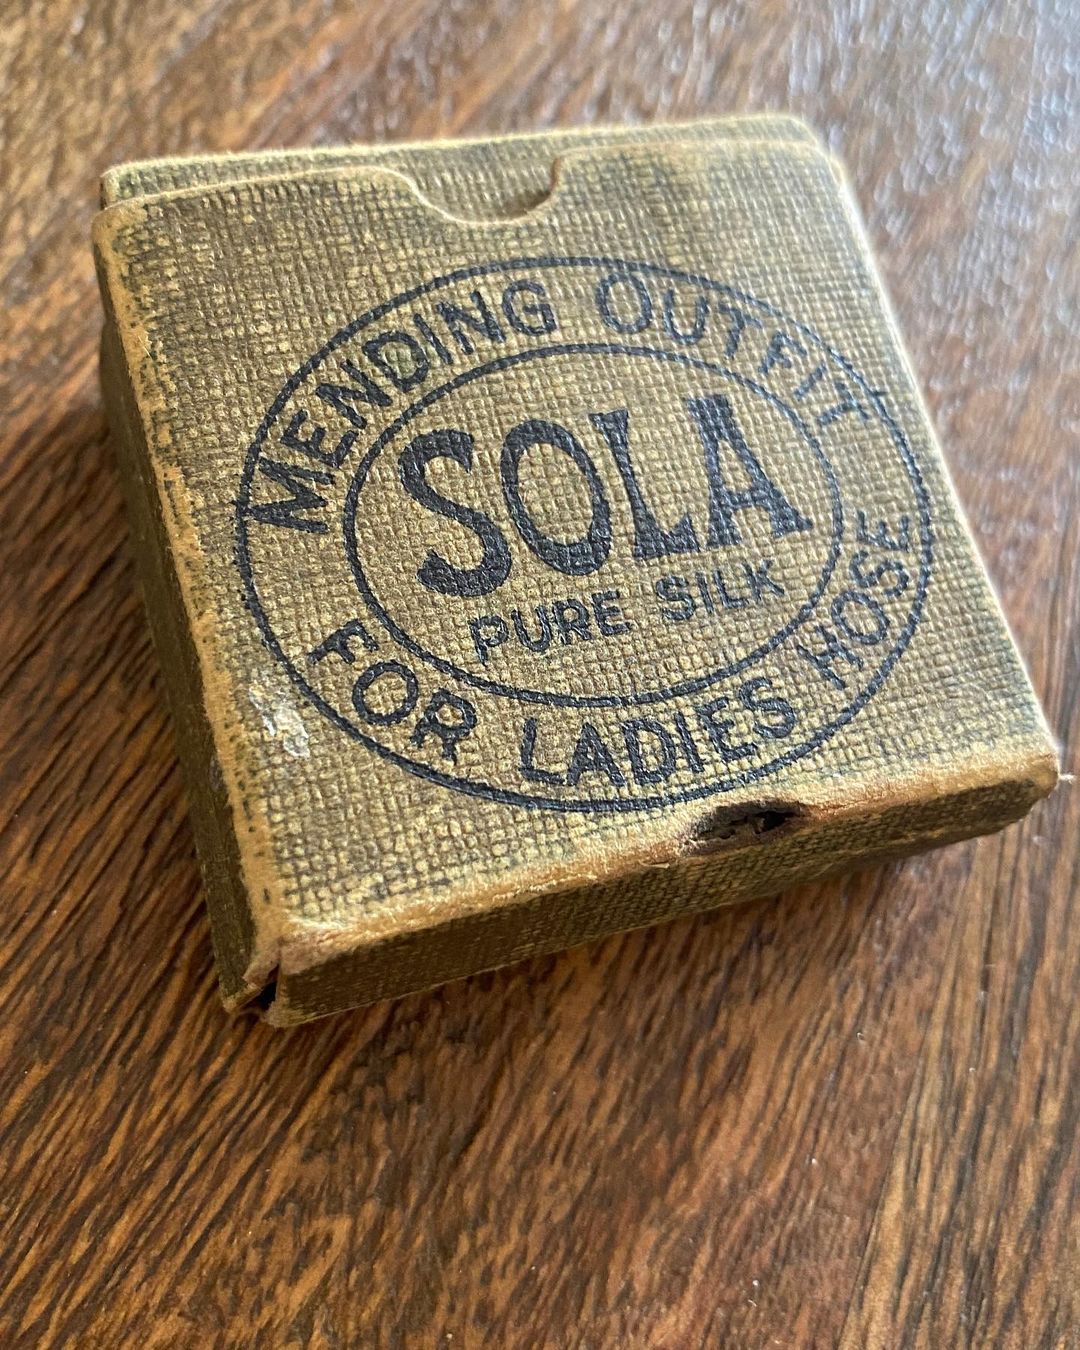 Vintage Sola pure silk mending kit for ladies hose #sillymoney #hounslowcarboot (at Hanworth, Hounslow, United Kingdom)
https://www.instagram.com/p/Cp-EJ0DIkN3/?igshid=NGJjMDIxMWI=